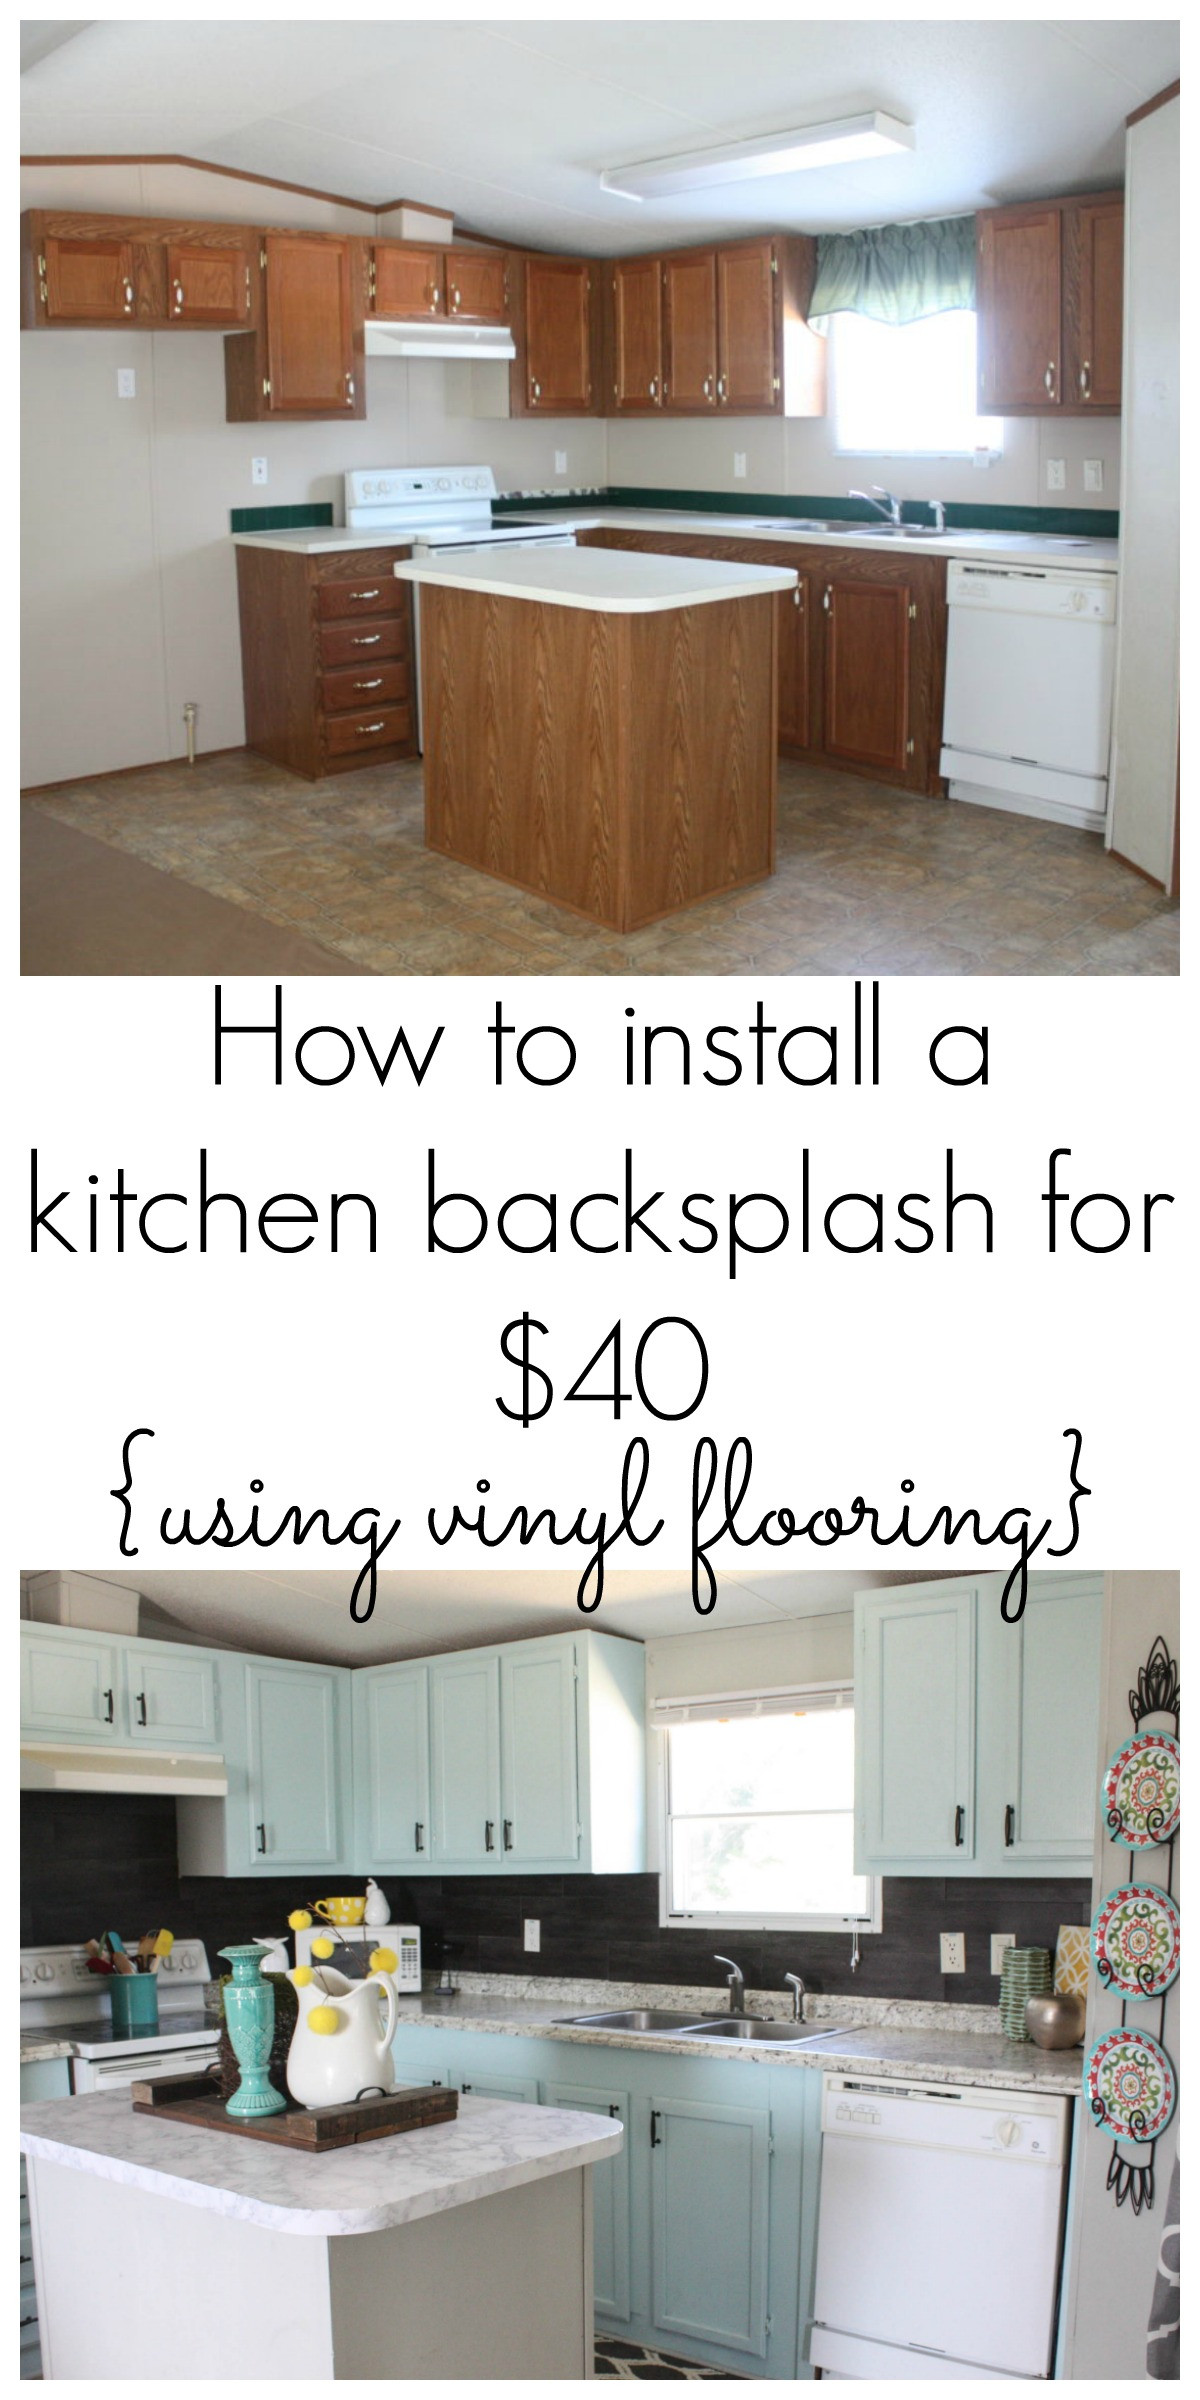 Stick On Backsplash Kitchen
 Our $40 Backsplash Using Vinyl Flooring Re Fabbed